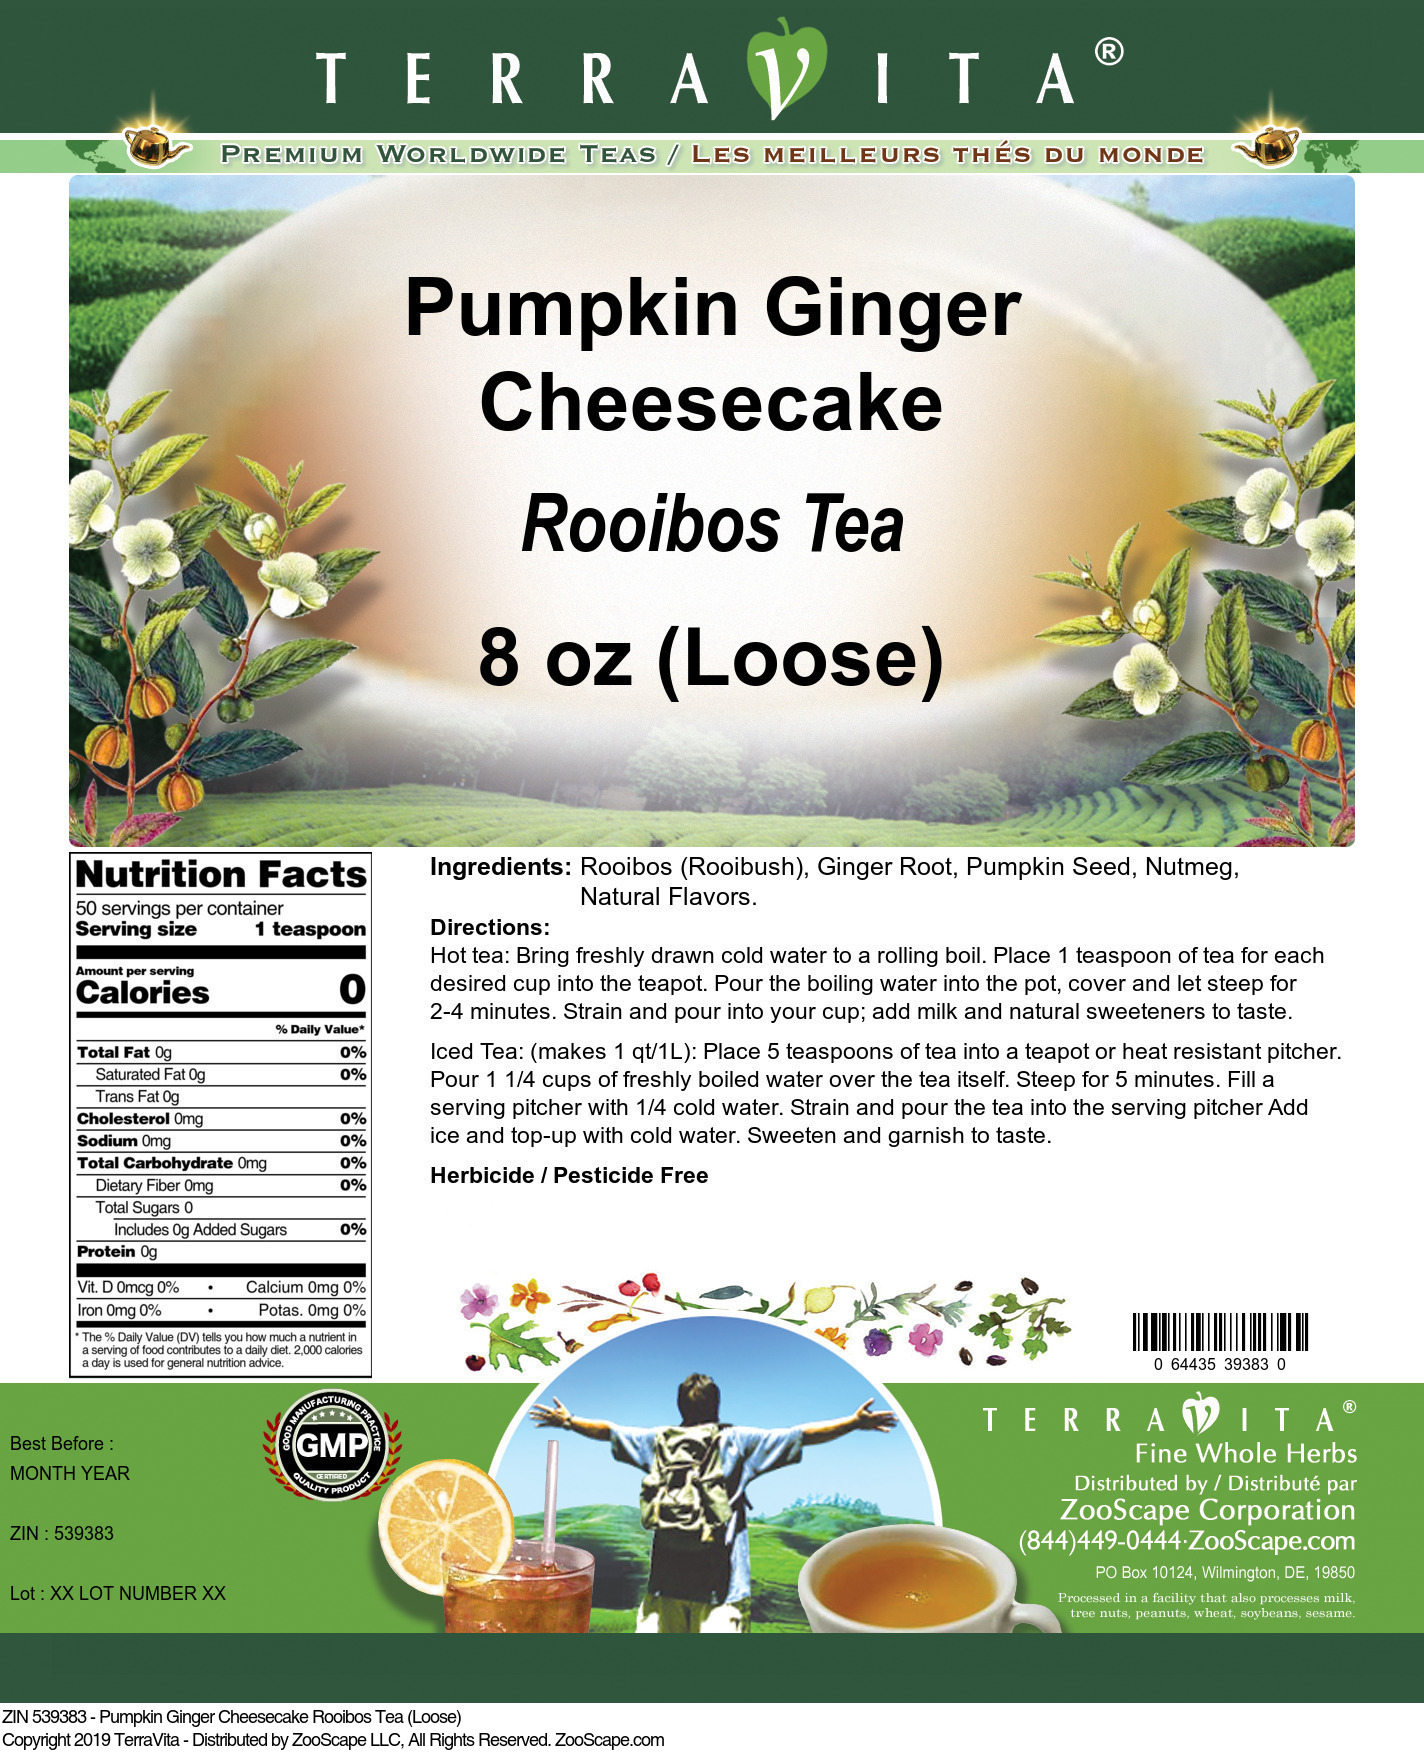 Pumpkin Ginger Cheesecake Rooibos Tea (Loose) - Label